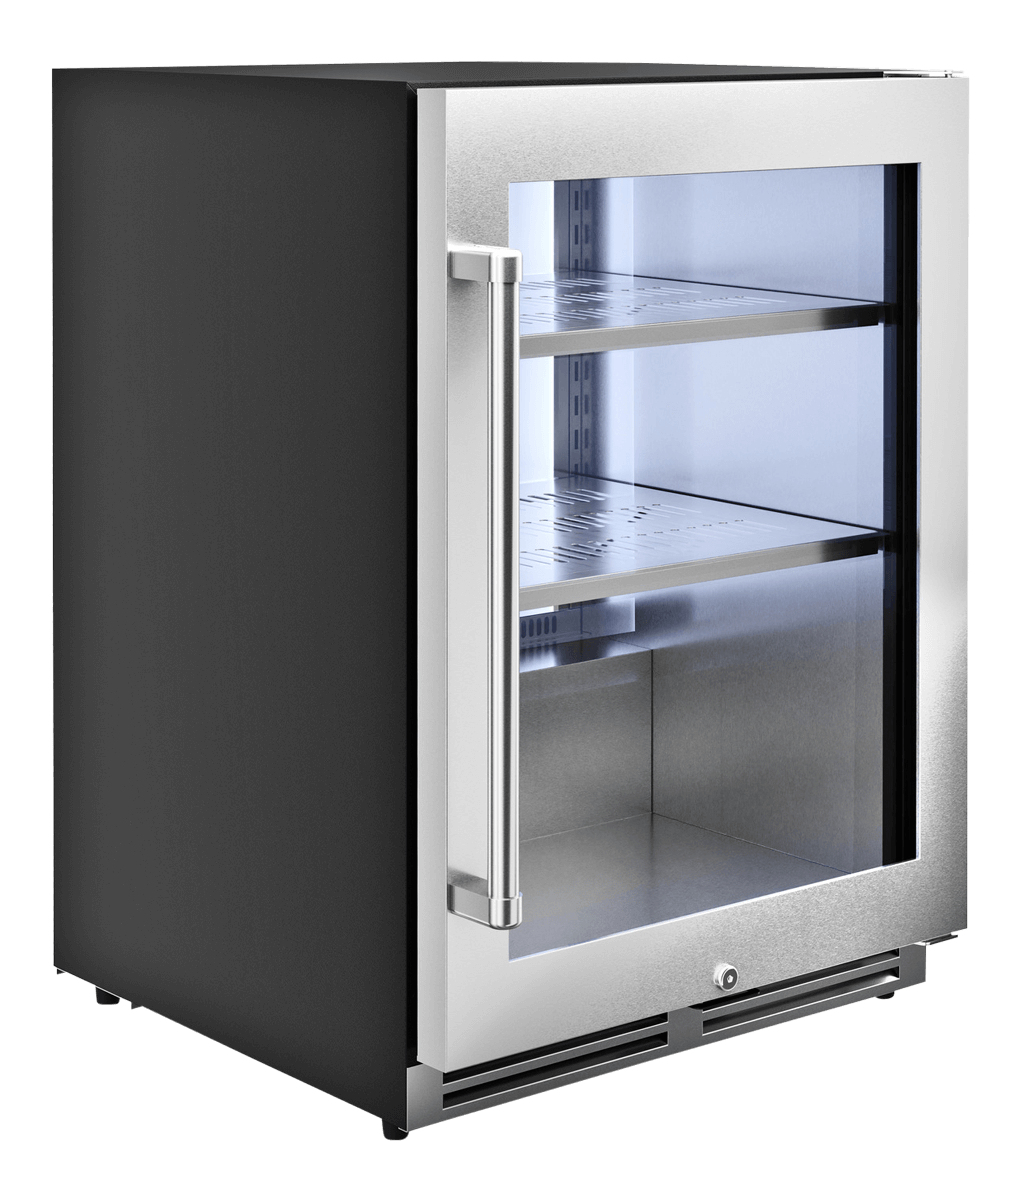 Thor Kitchen 24 Inch Professional Undercounter Beverage Cooler – Model Number TBR24U